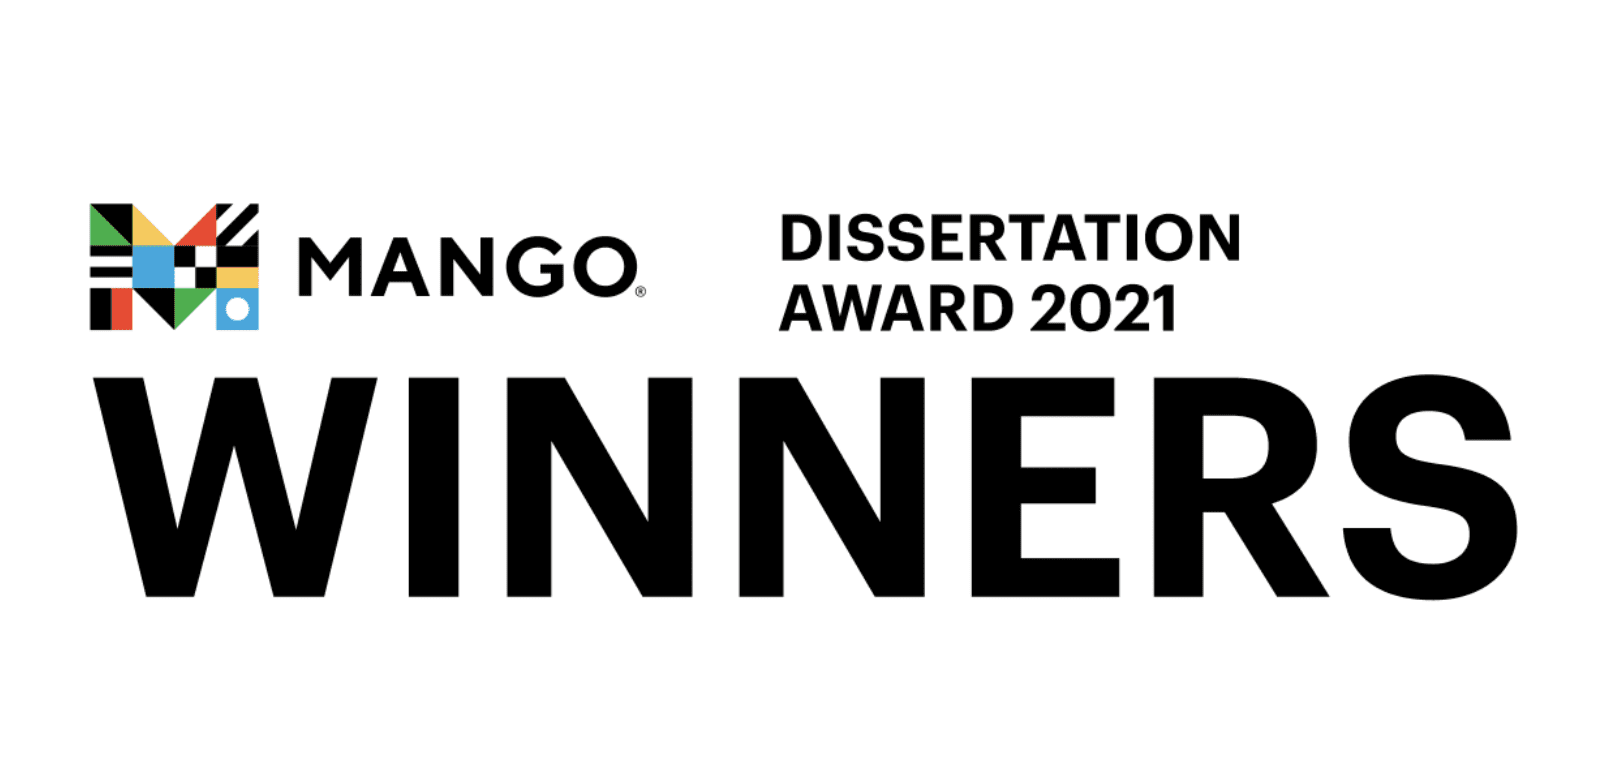 Dissertation Award Winners 2021